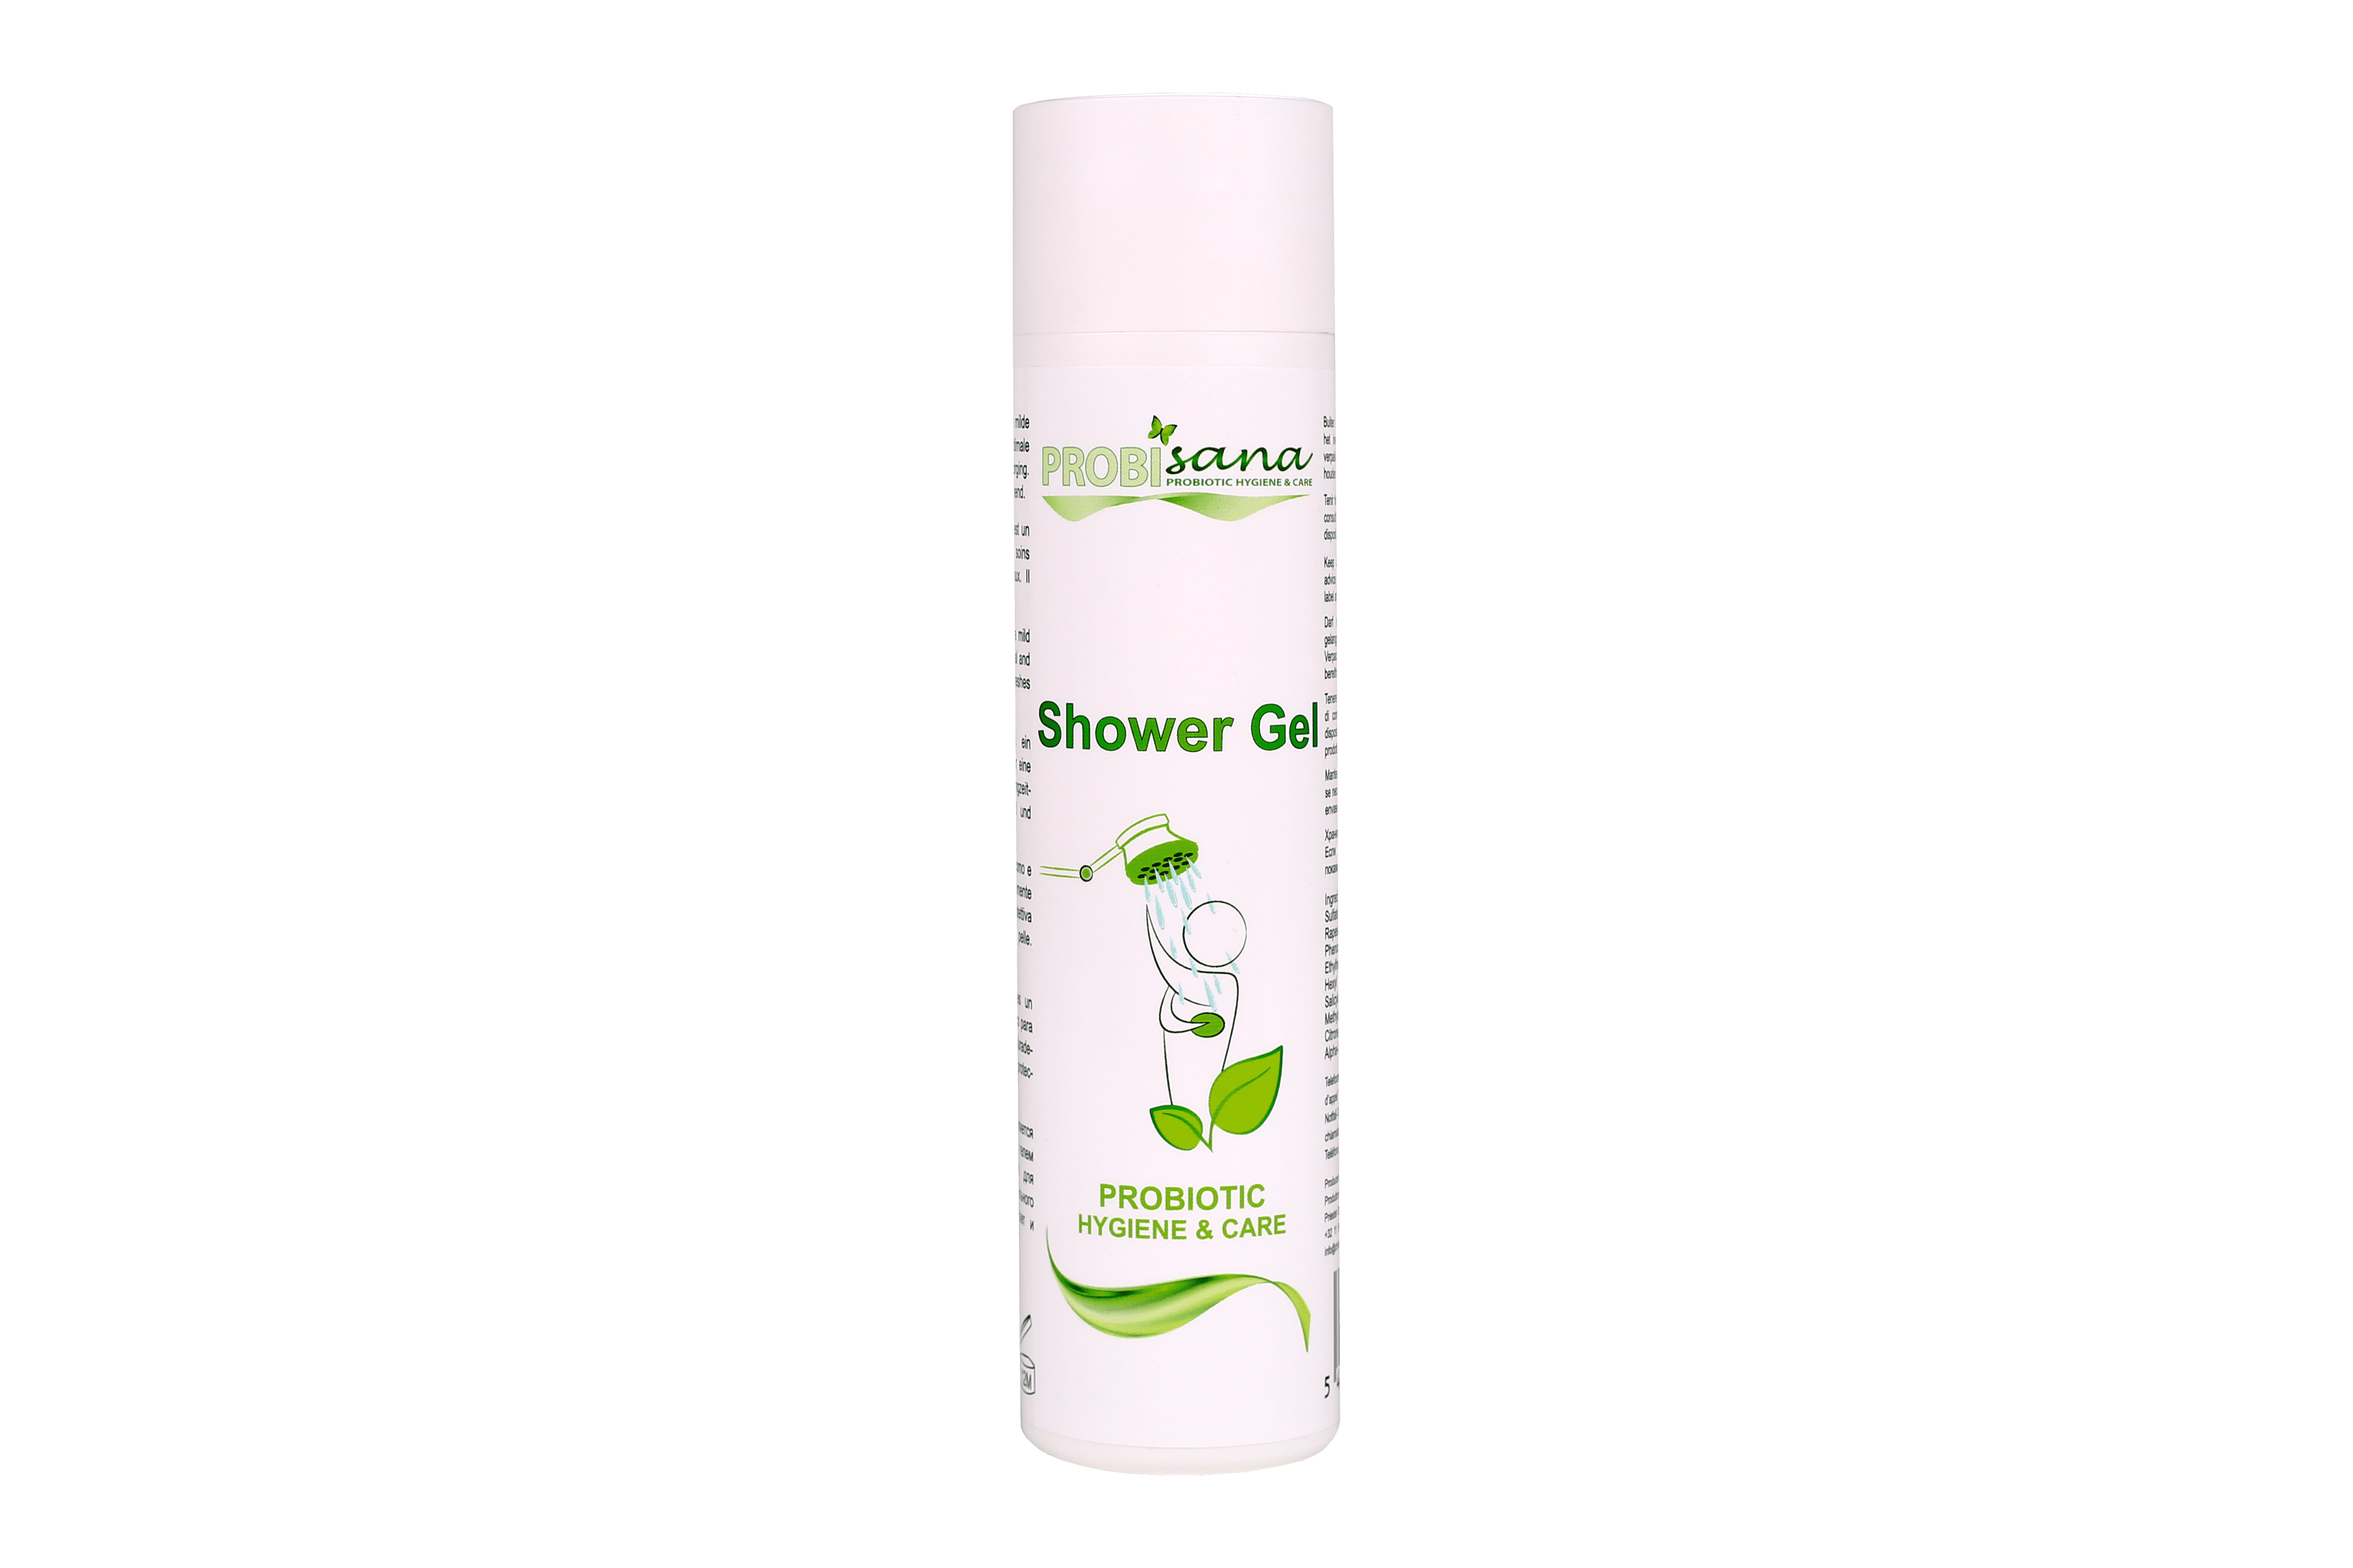 60550 Probisana Shower Gel